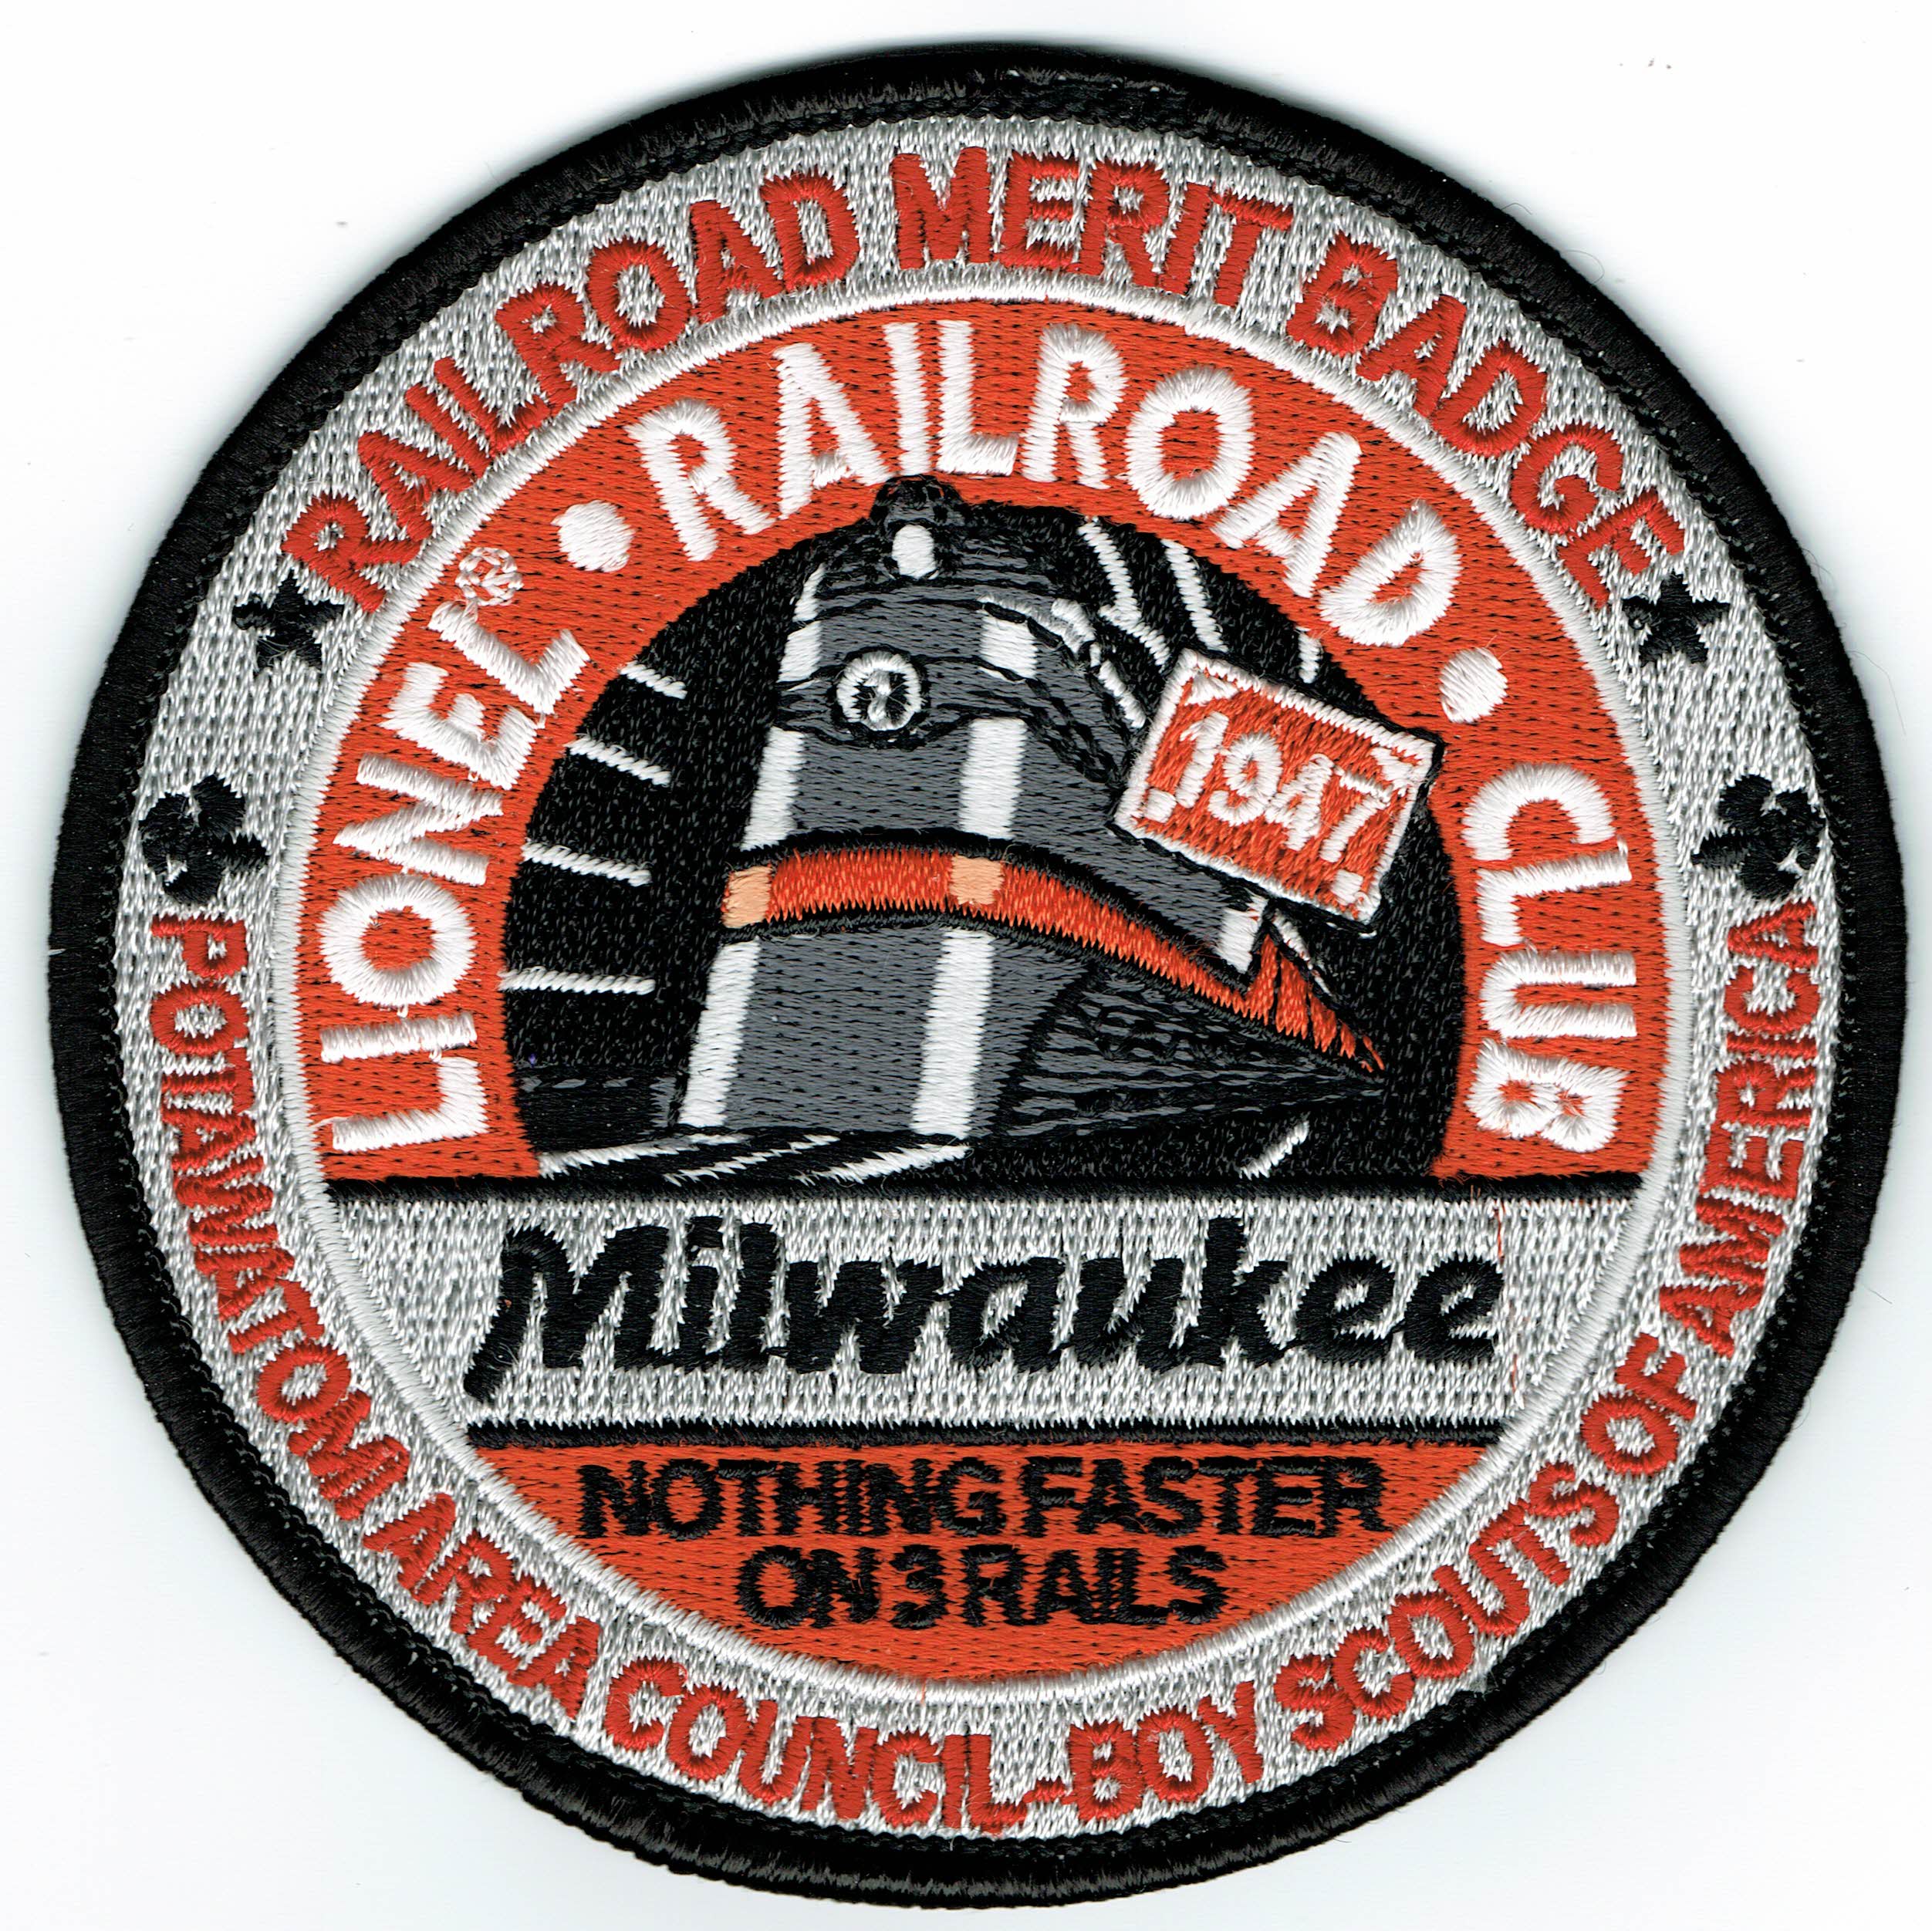 Railroad MB - Milw LRRC - Potawatomi Council BSA image